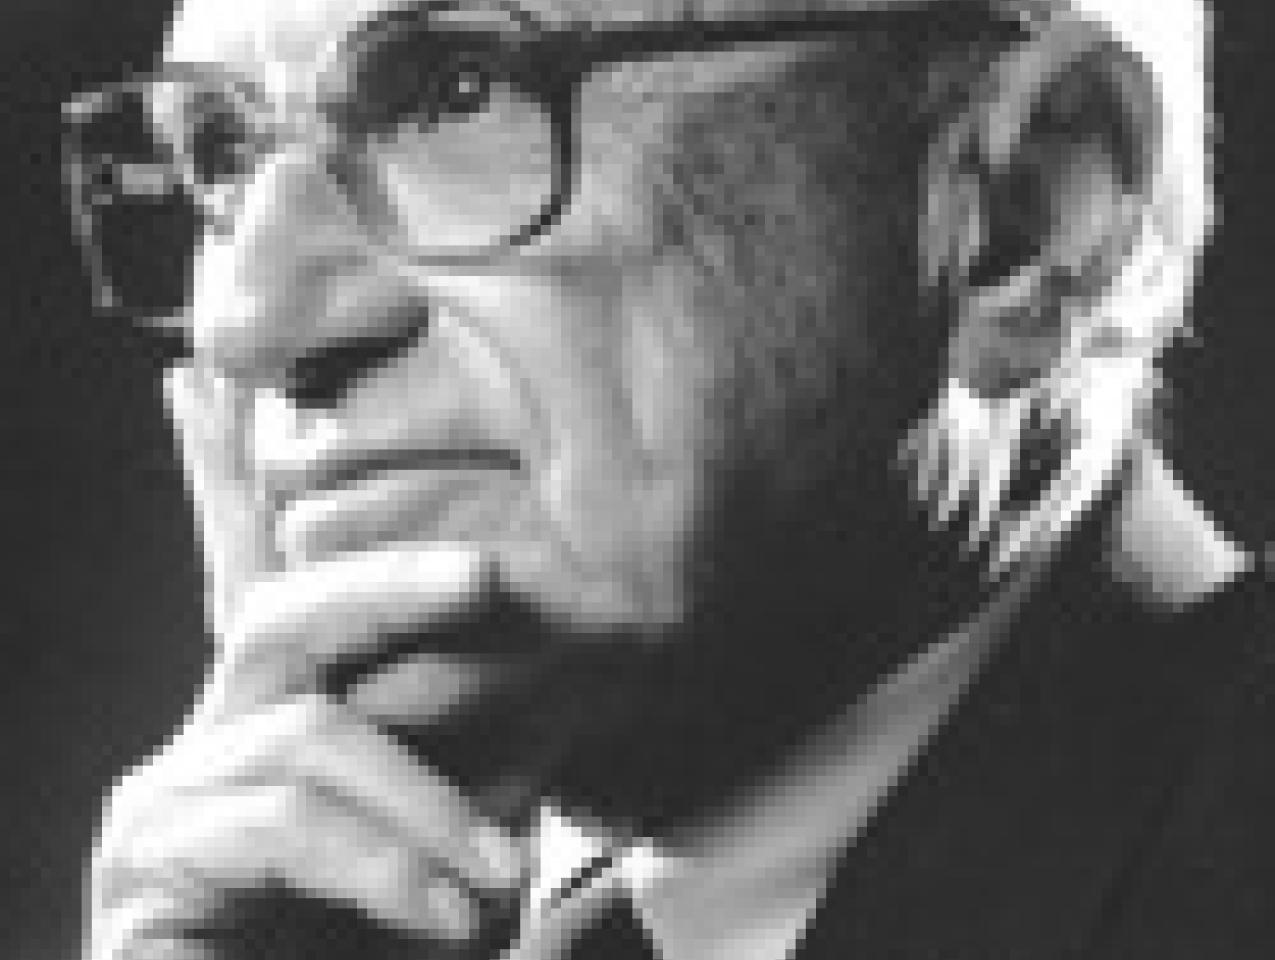 Former Hoover fellow and Nobel laureate Milton Friedman.